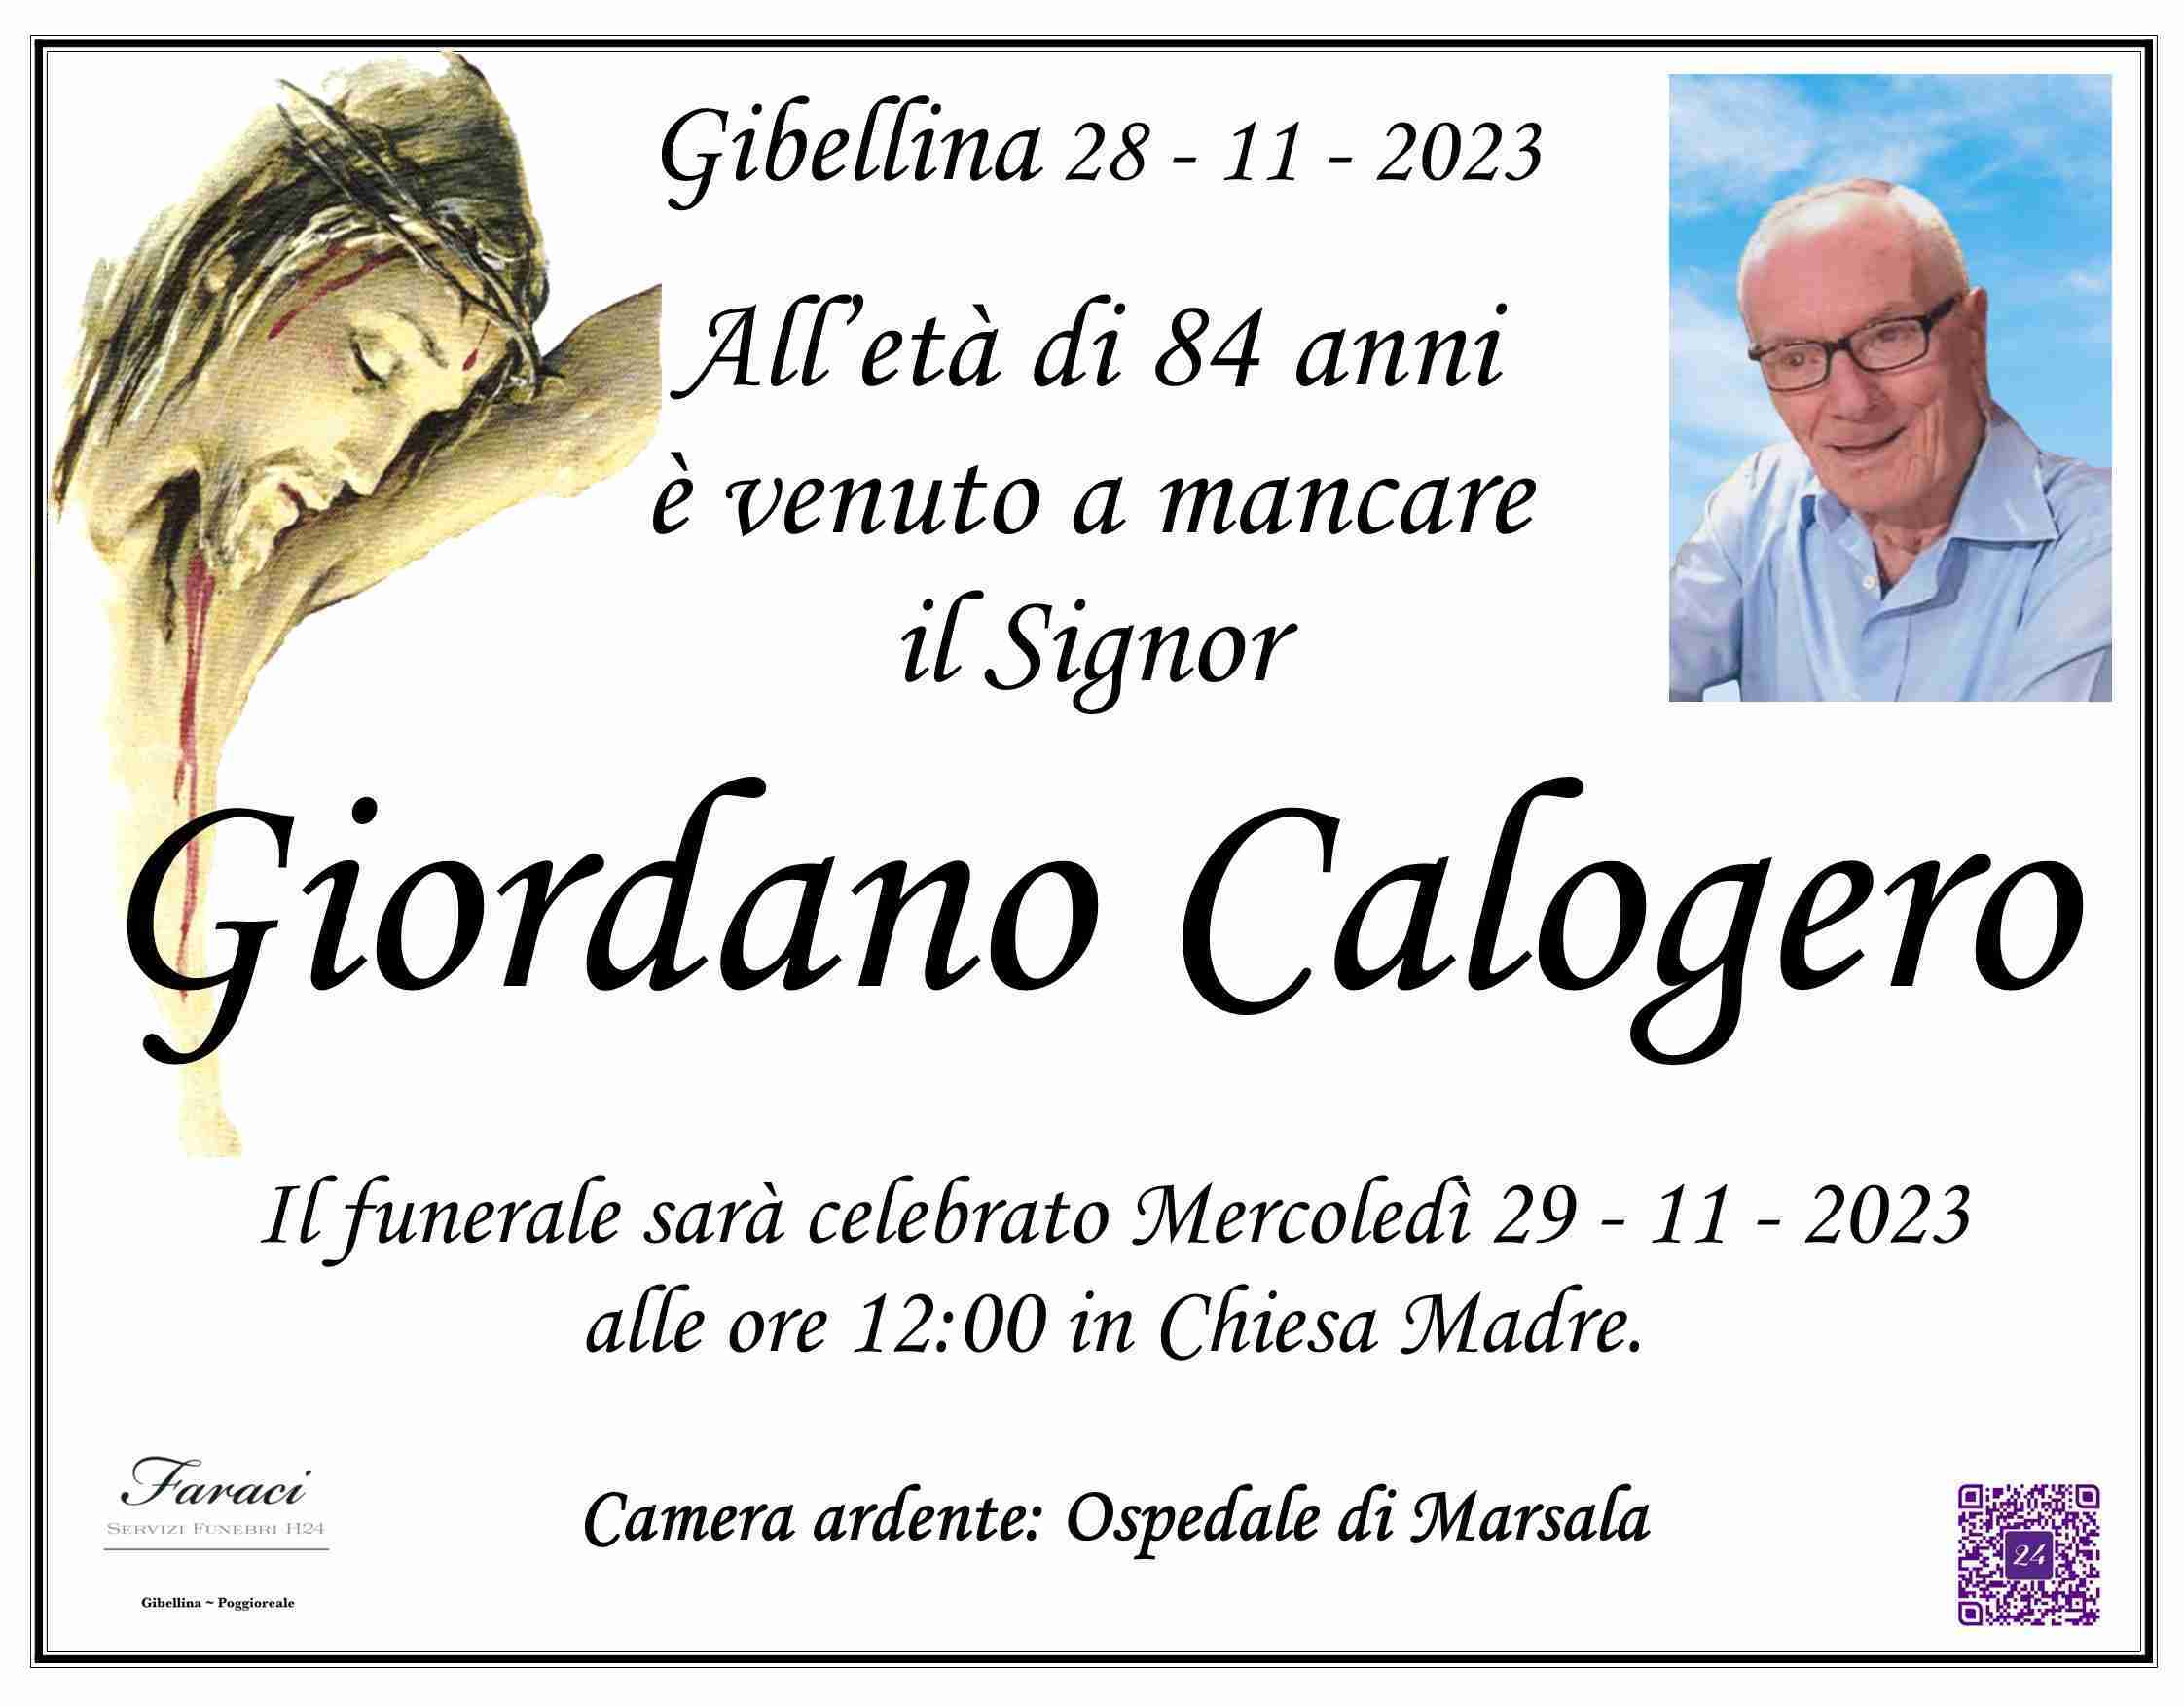 Calogero Giordano